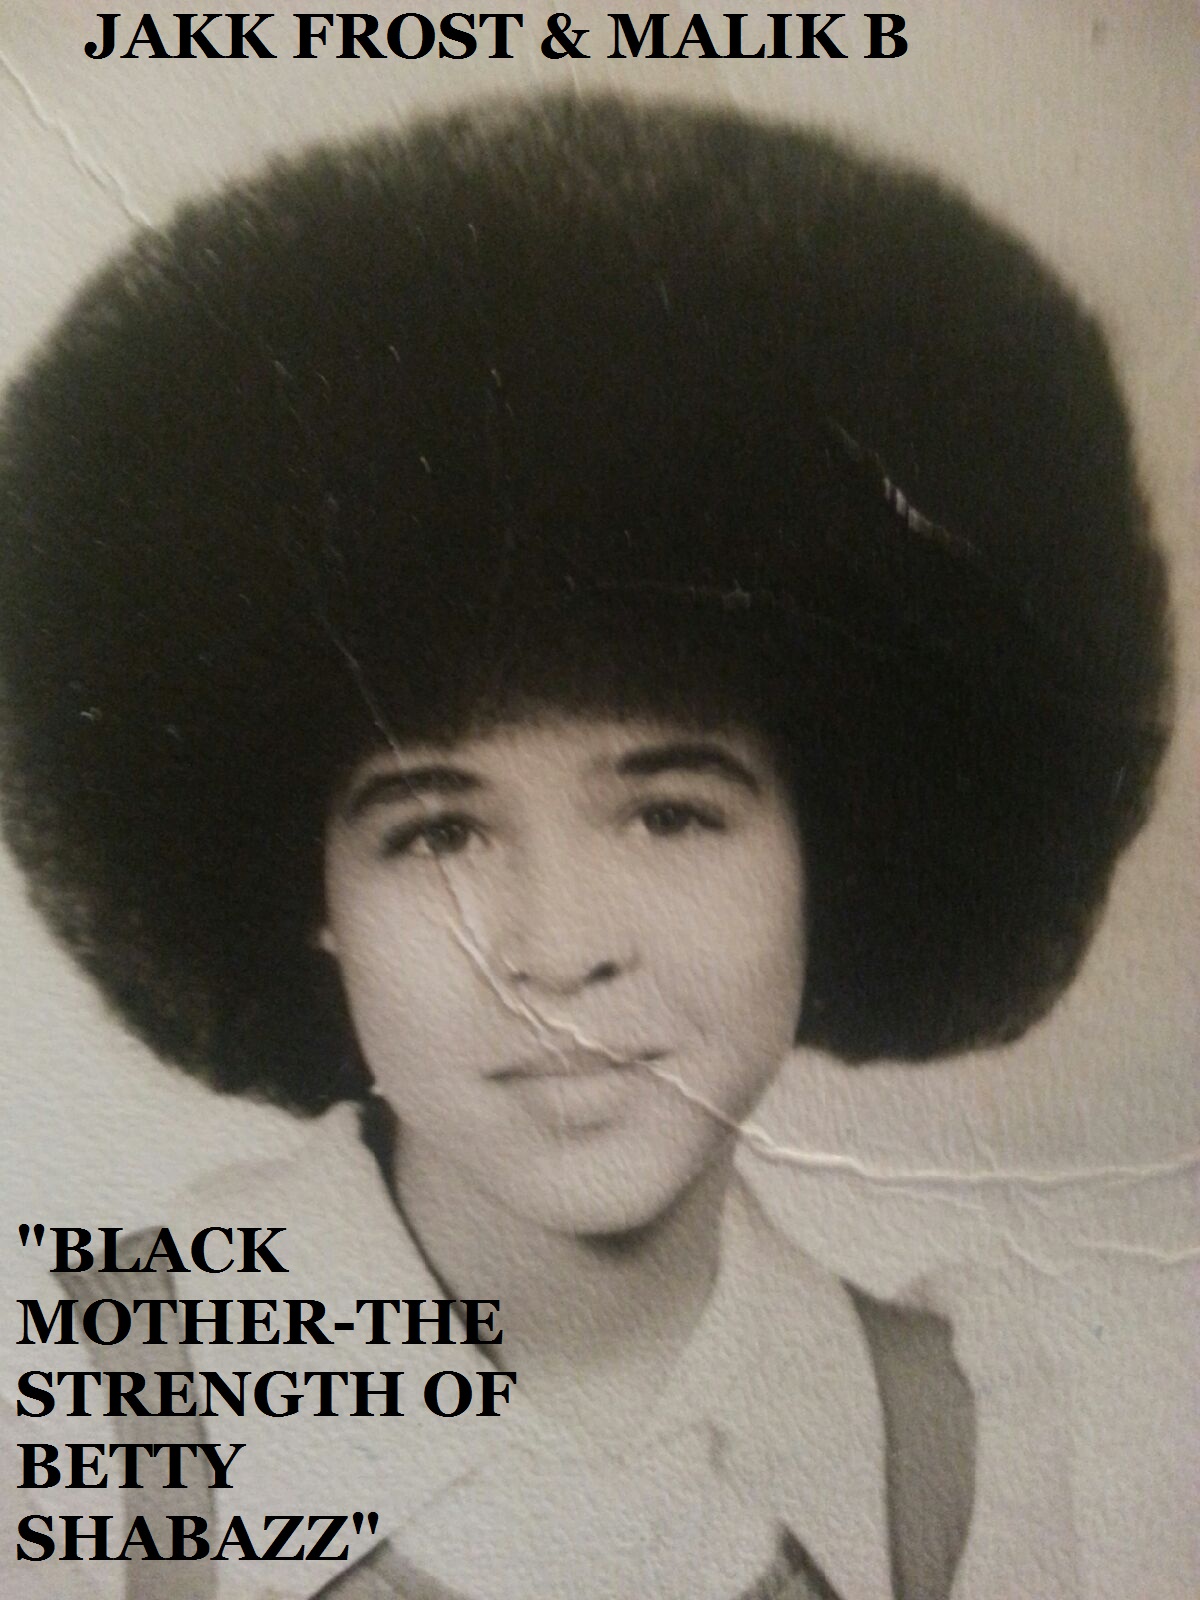 jakk-frost-black-mother-the-strength-of-betty-shabazz-ft-malik-b-HHS1987-2013 Jakk Frost x Malik B (@JakkFrost & @MalikOfTheRoots) - Black Mother (The Strength of Betty Shabazz)  